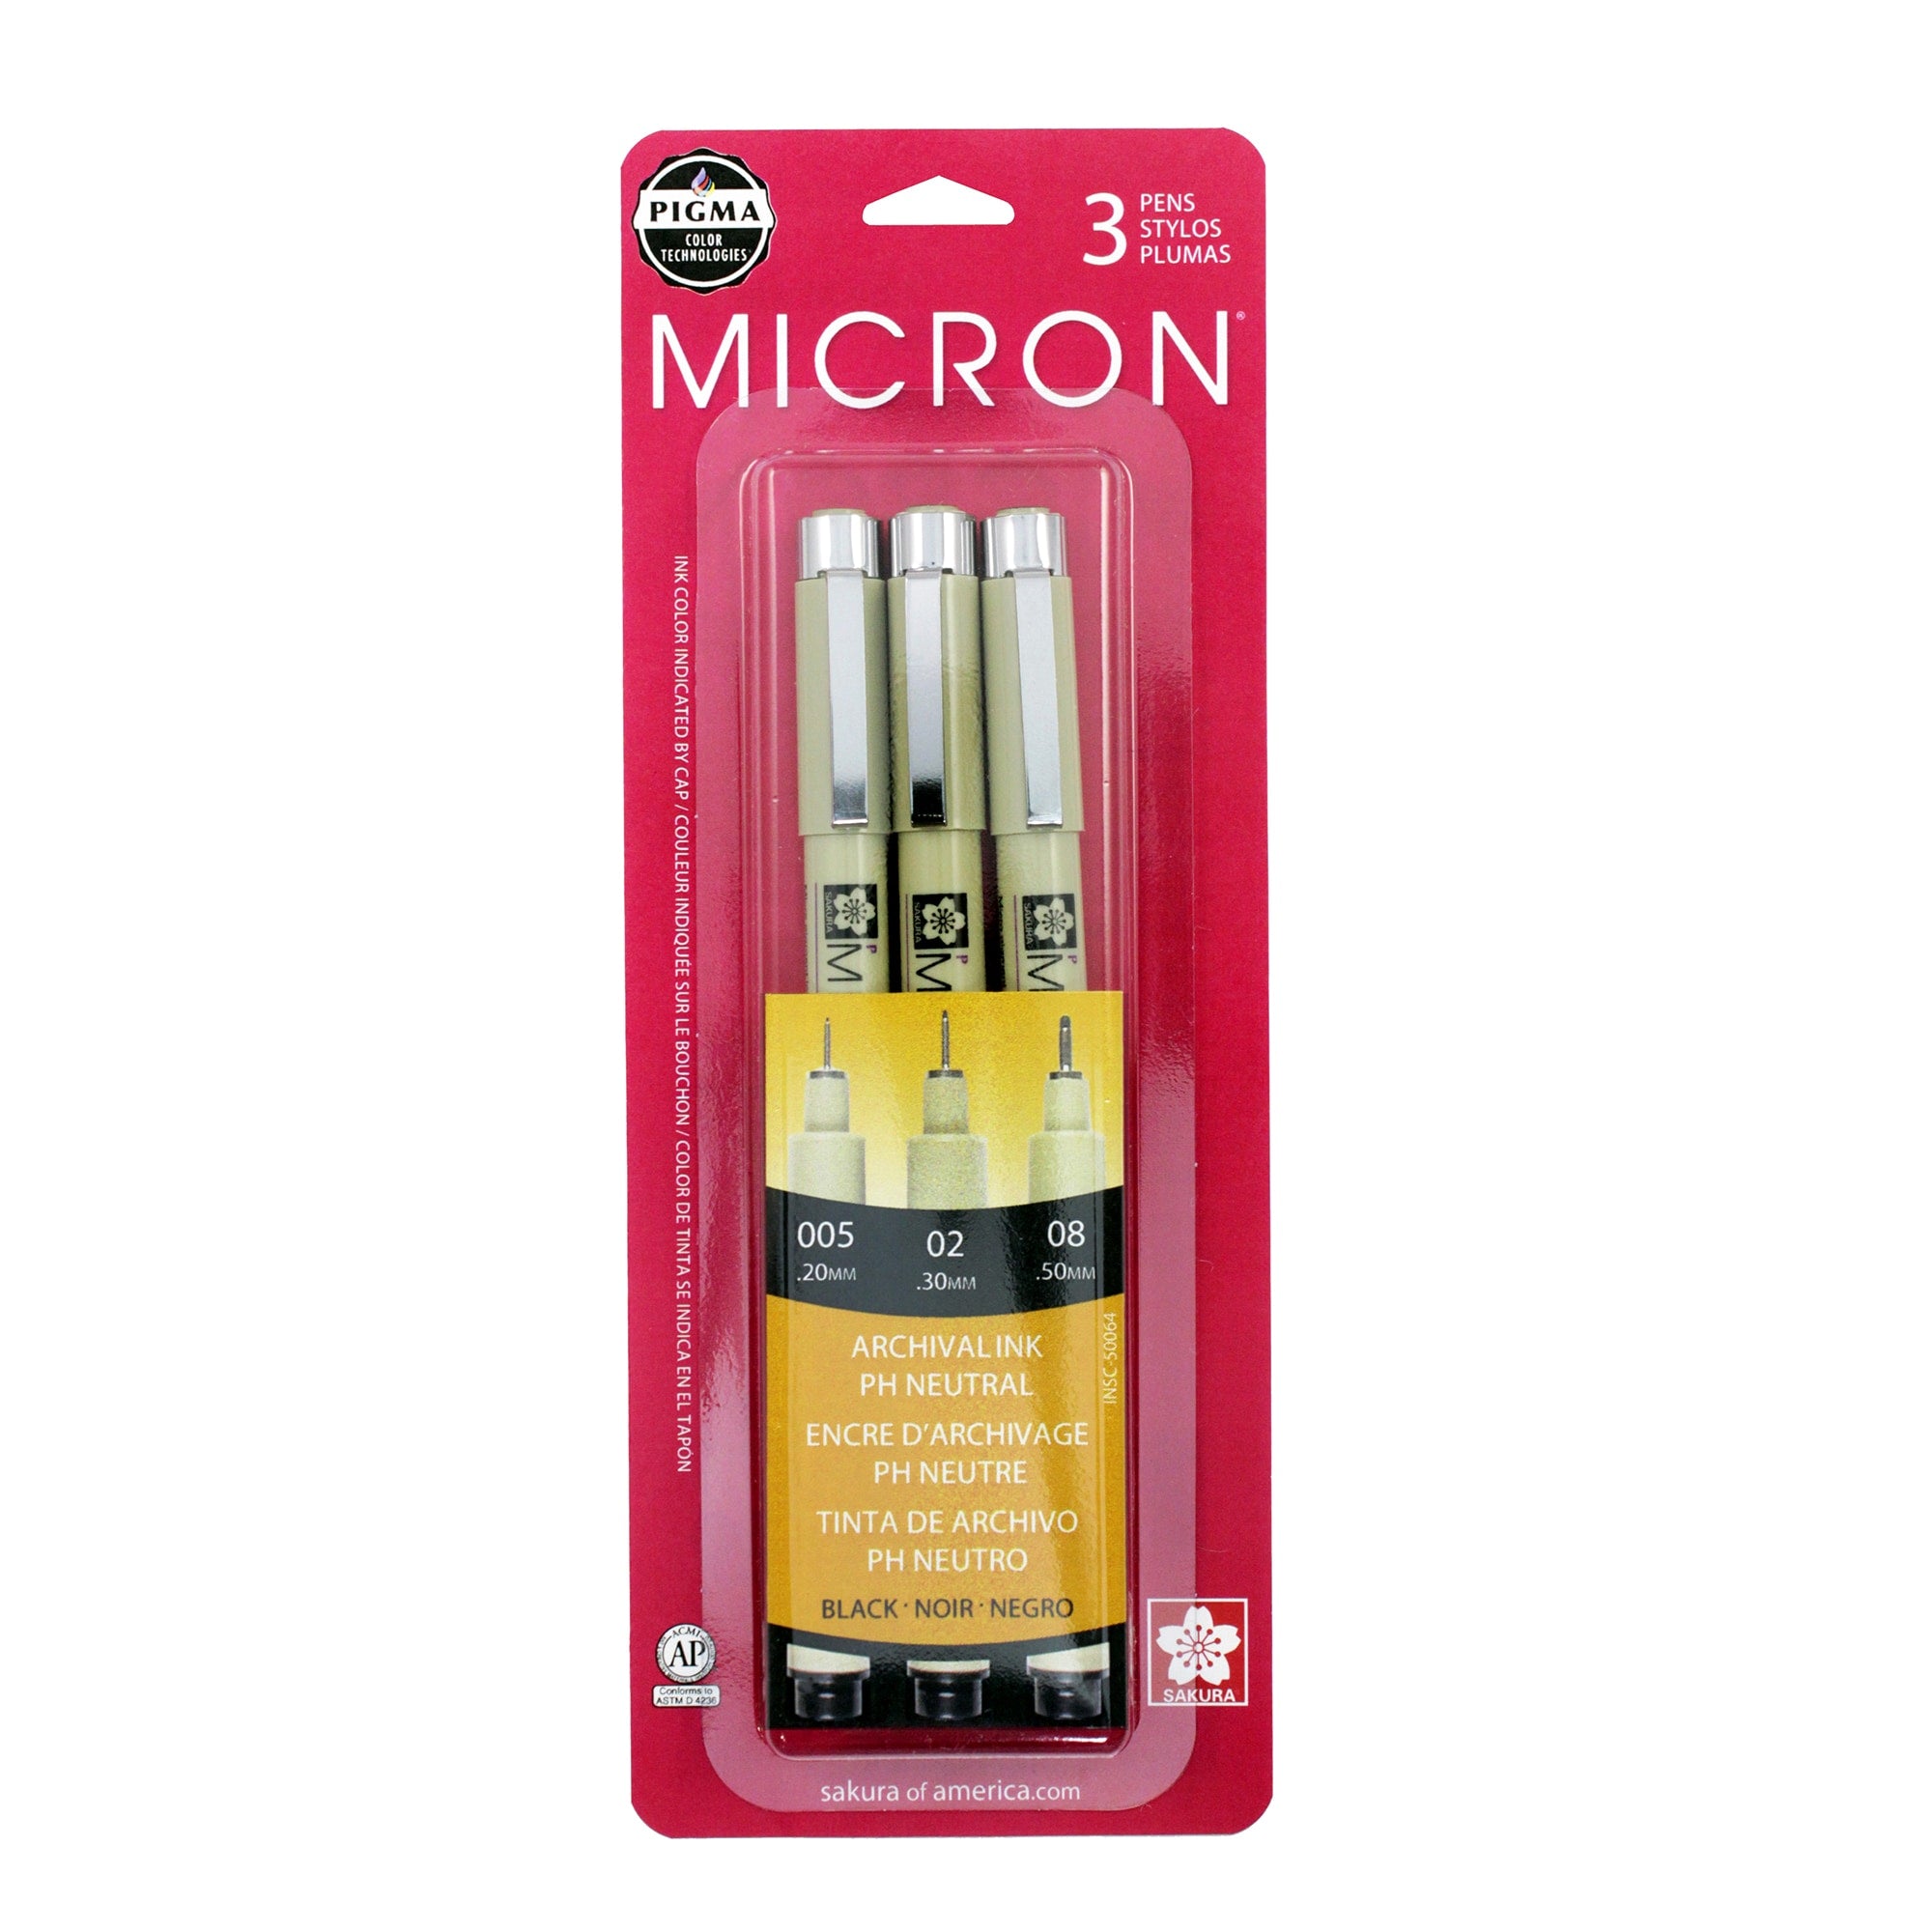 Micron Black 3 Pack - 005, 02, 08